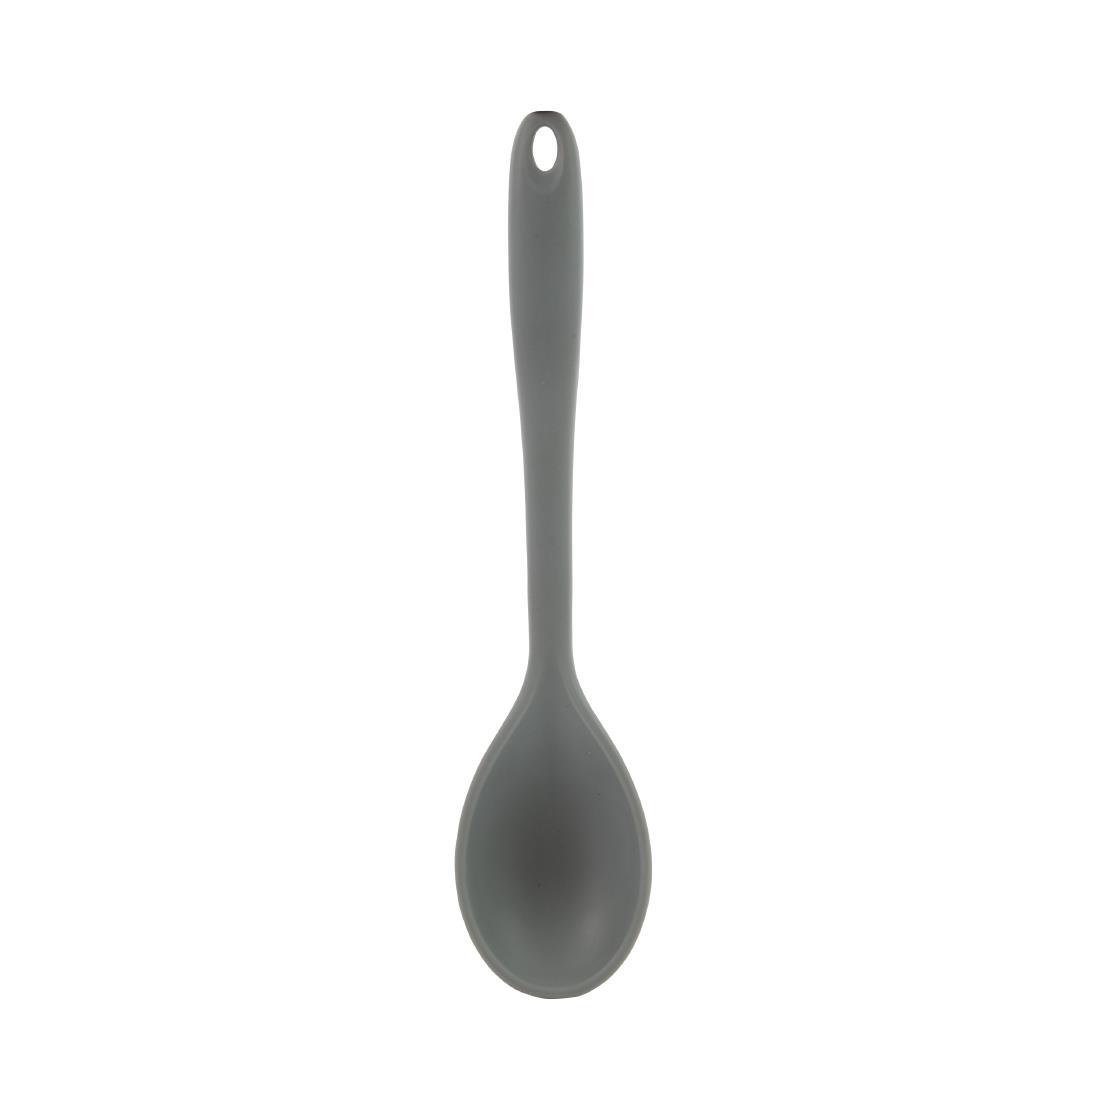 Vogue Silicone High Heat Cooking Spoon Grey - DA523  - 3